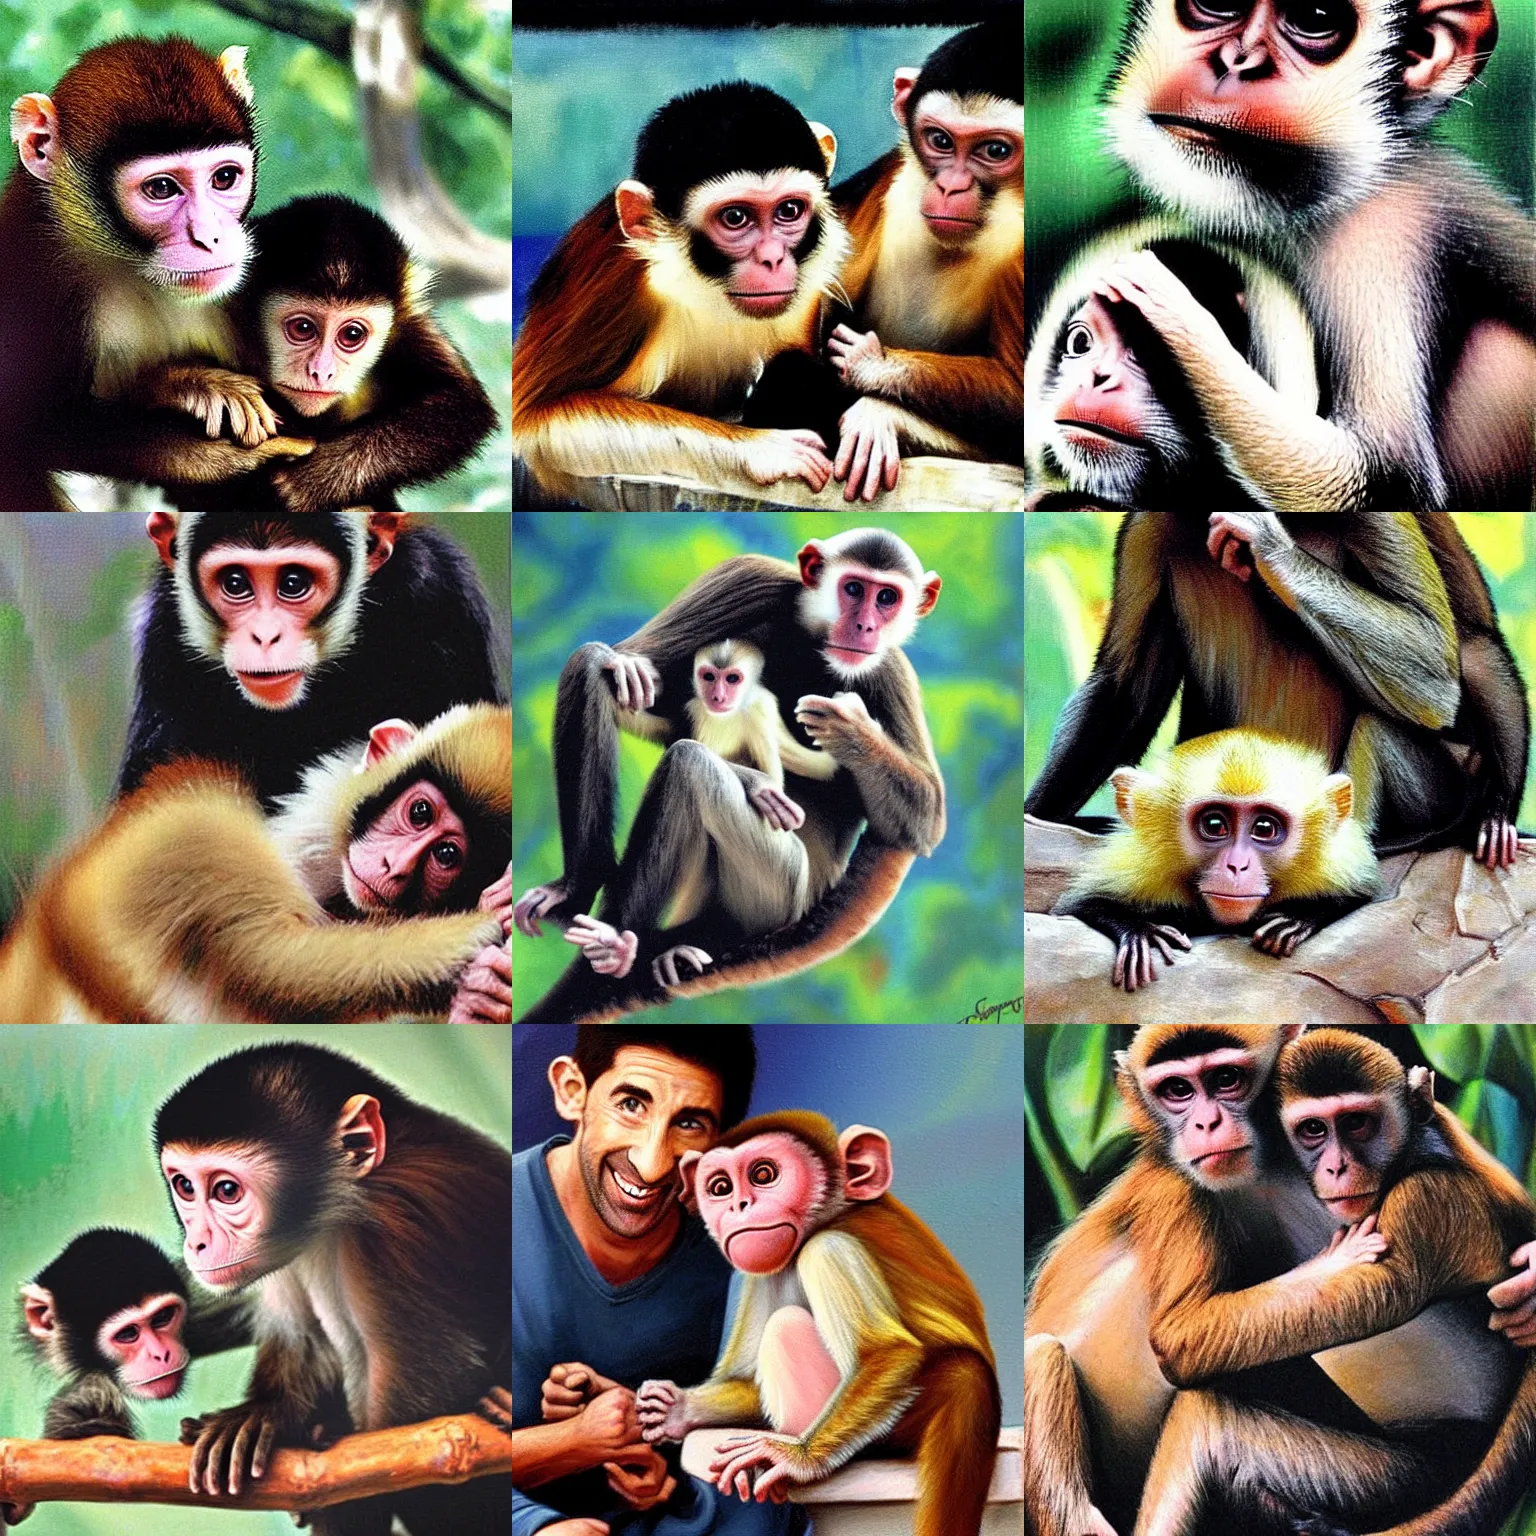 Prompt: a capuchin monkey biting ross geller, friends 9 0 s sitcom screenshot, painting by james gurney